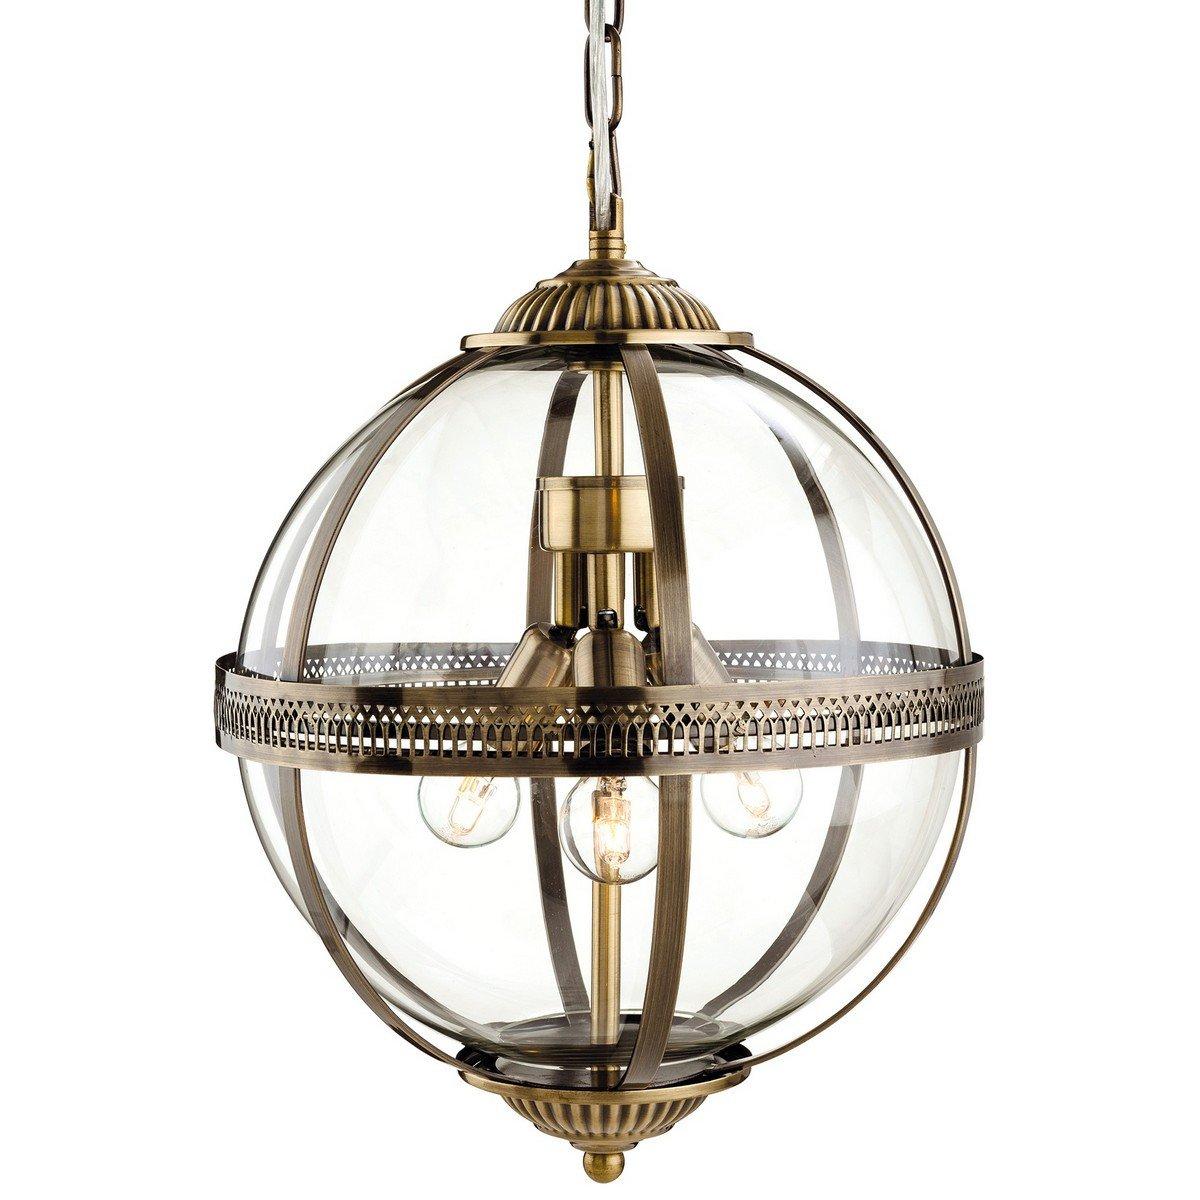 Mayfair 3 Light Spherical Ceiling Pendant Antique Brass Clear Glass E14